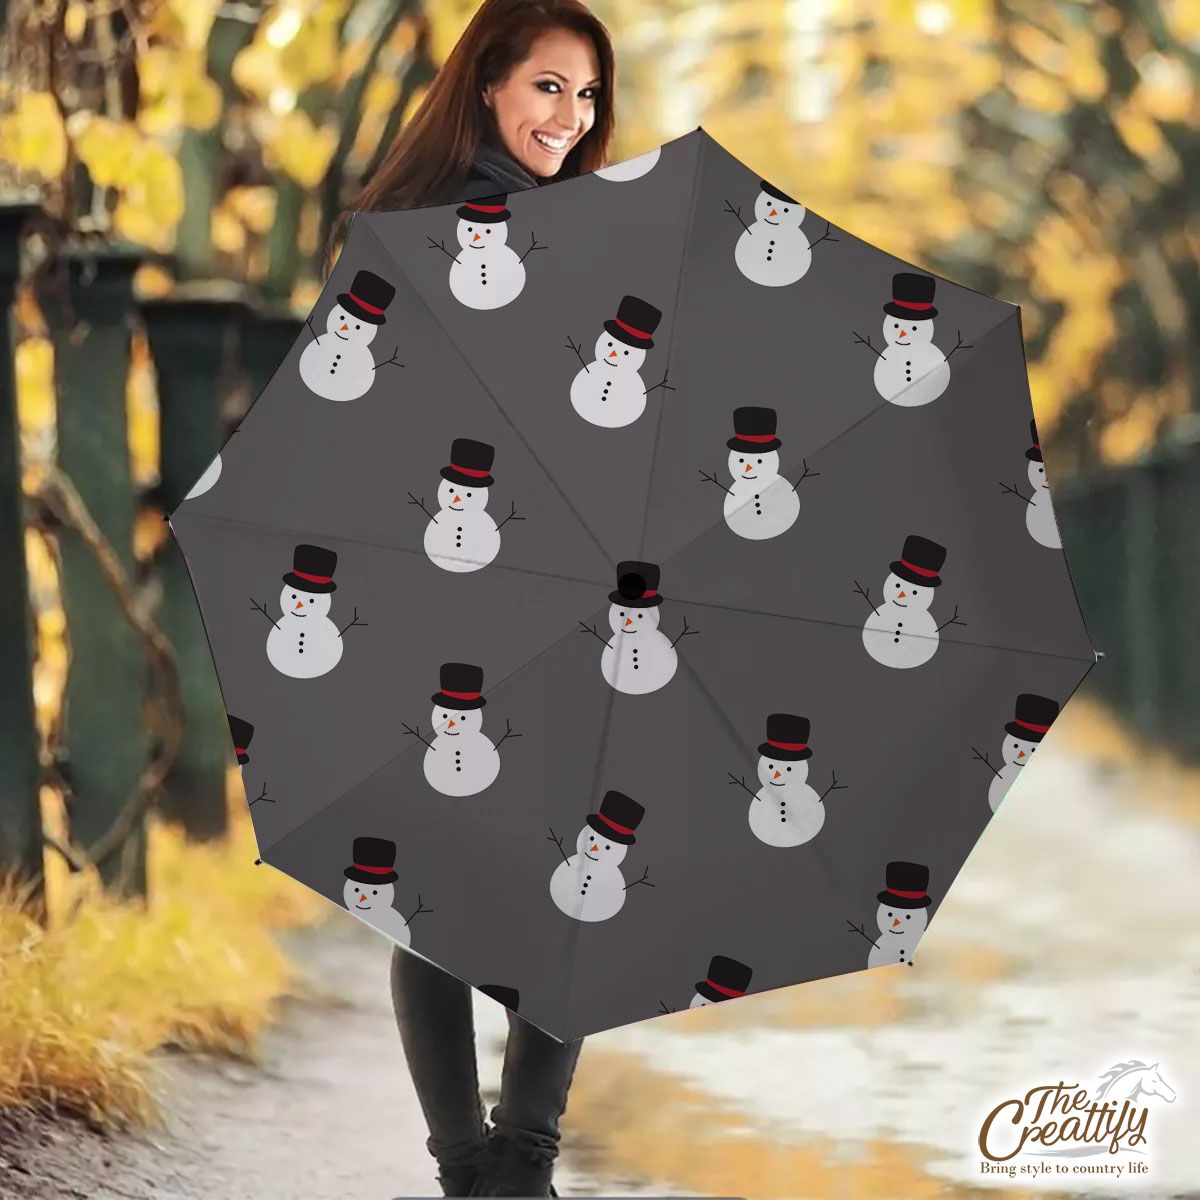 Snowman, Christmas Snowman, Snowman Hat on Dark Color Umbrella